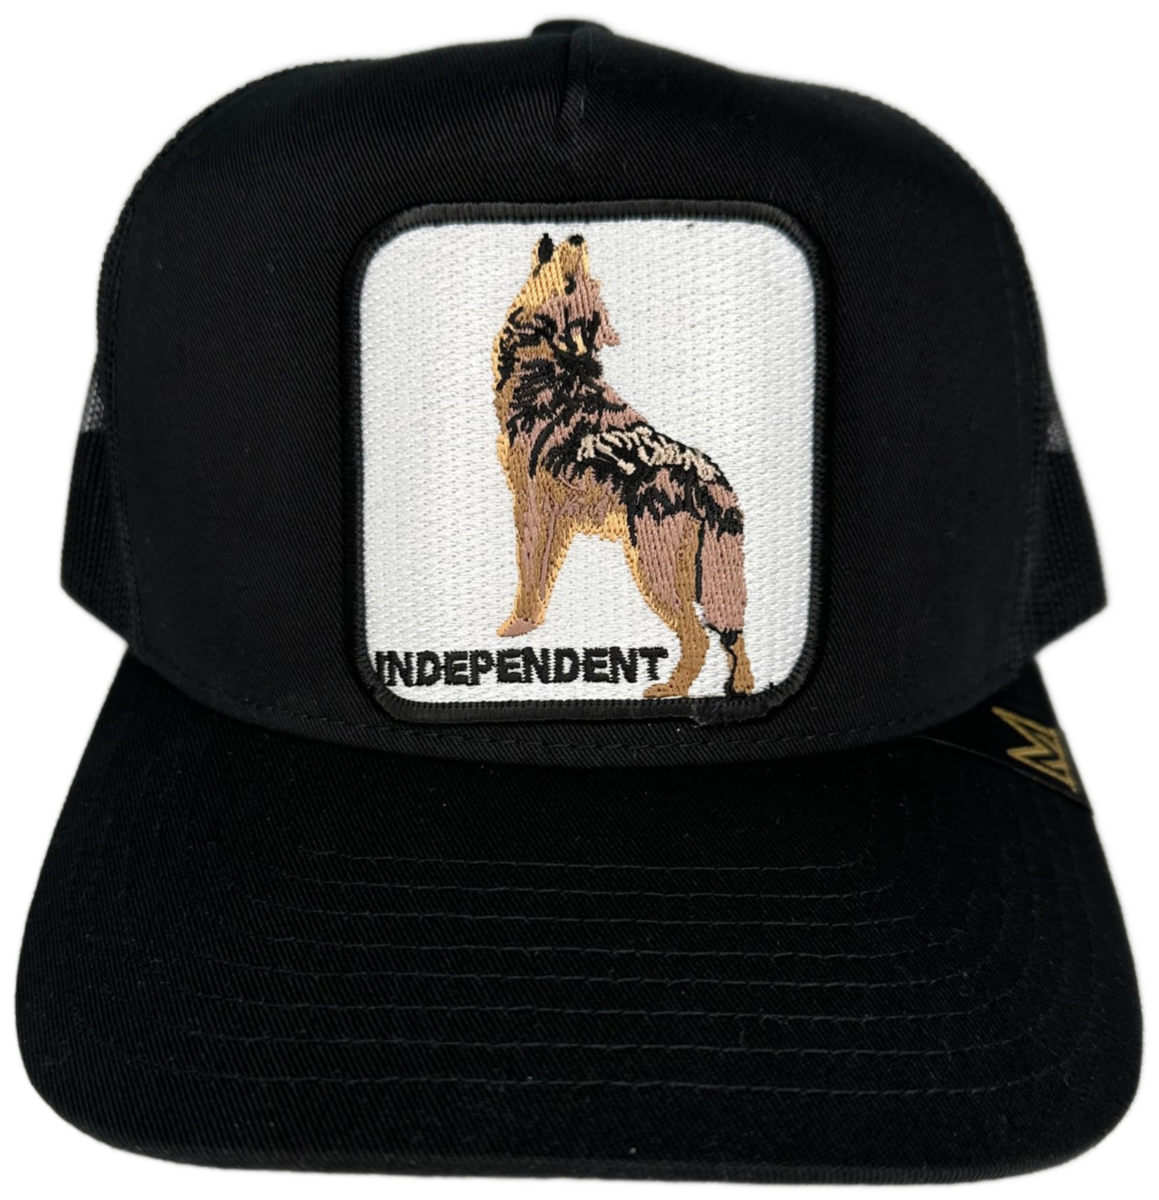 MV Dad Hats - Independent Trucker Hat - Black/Black